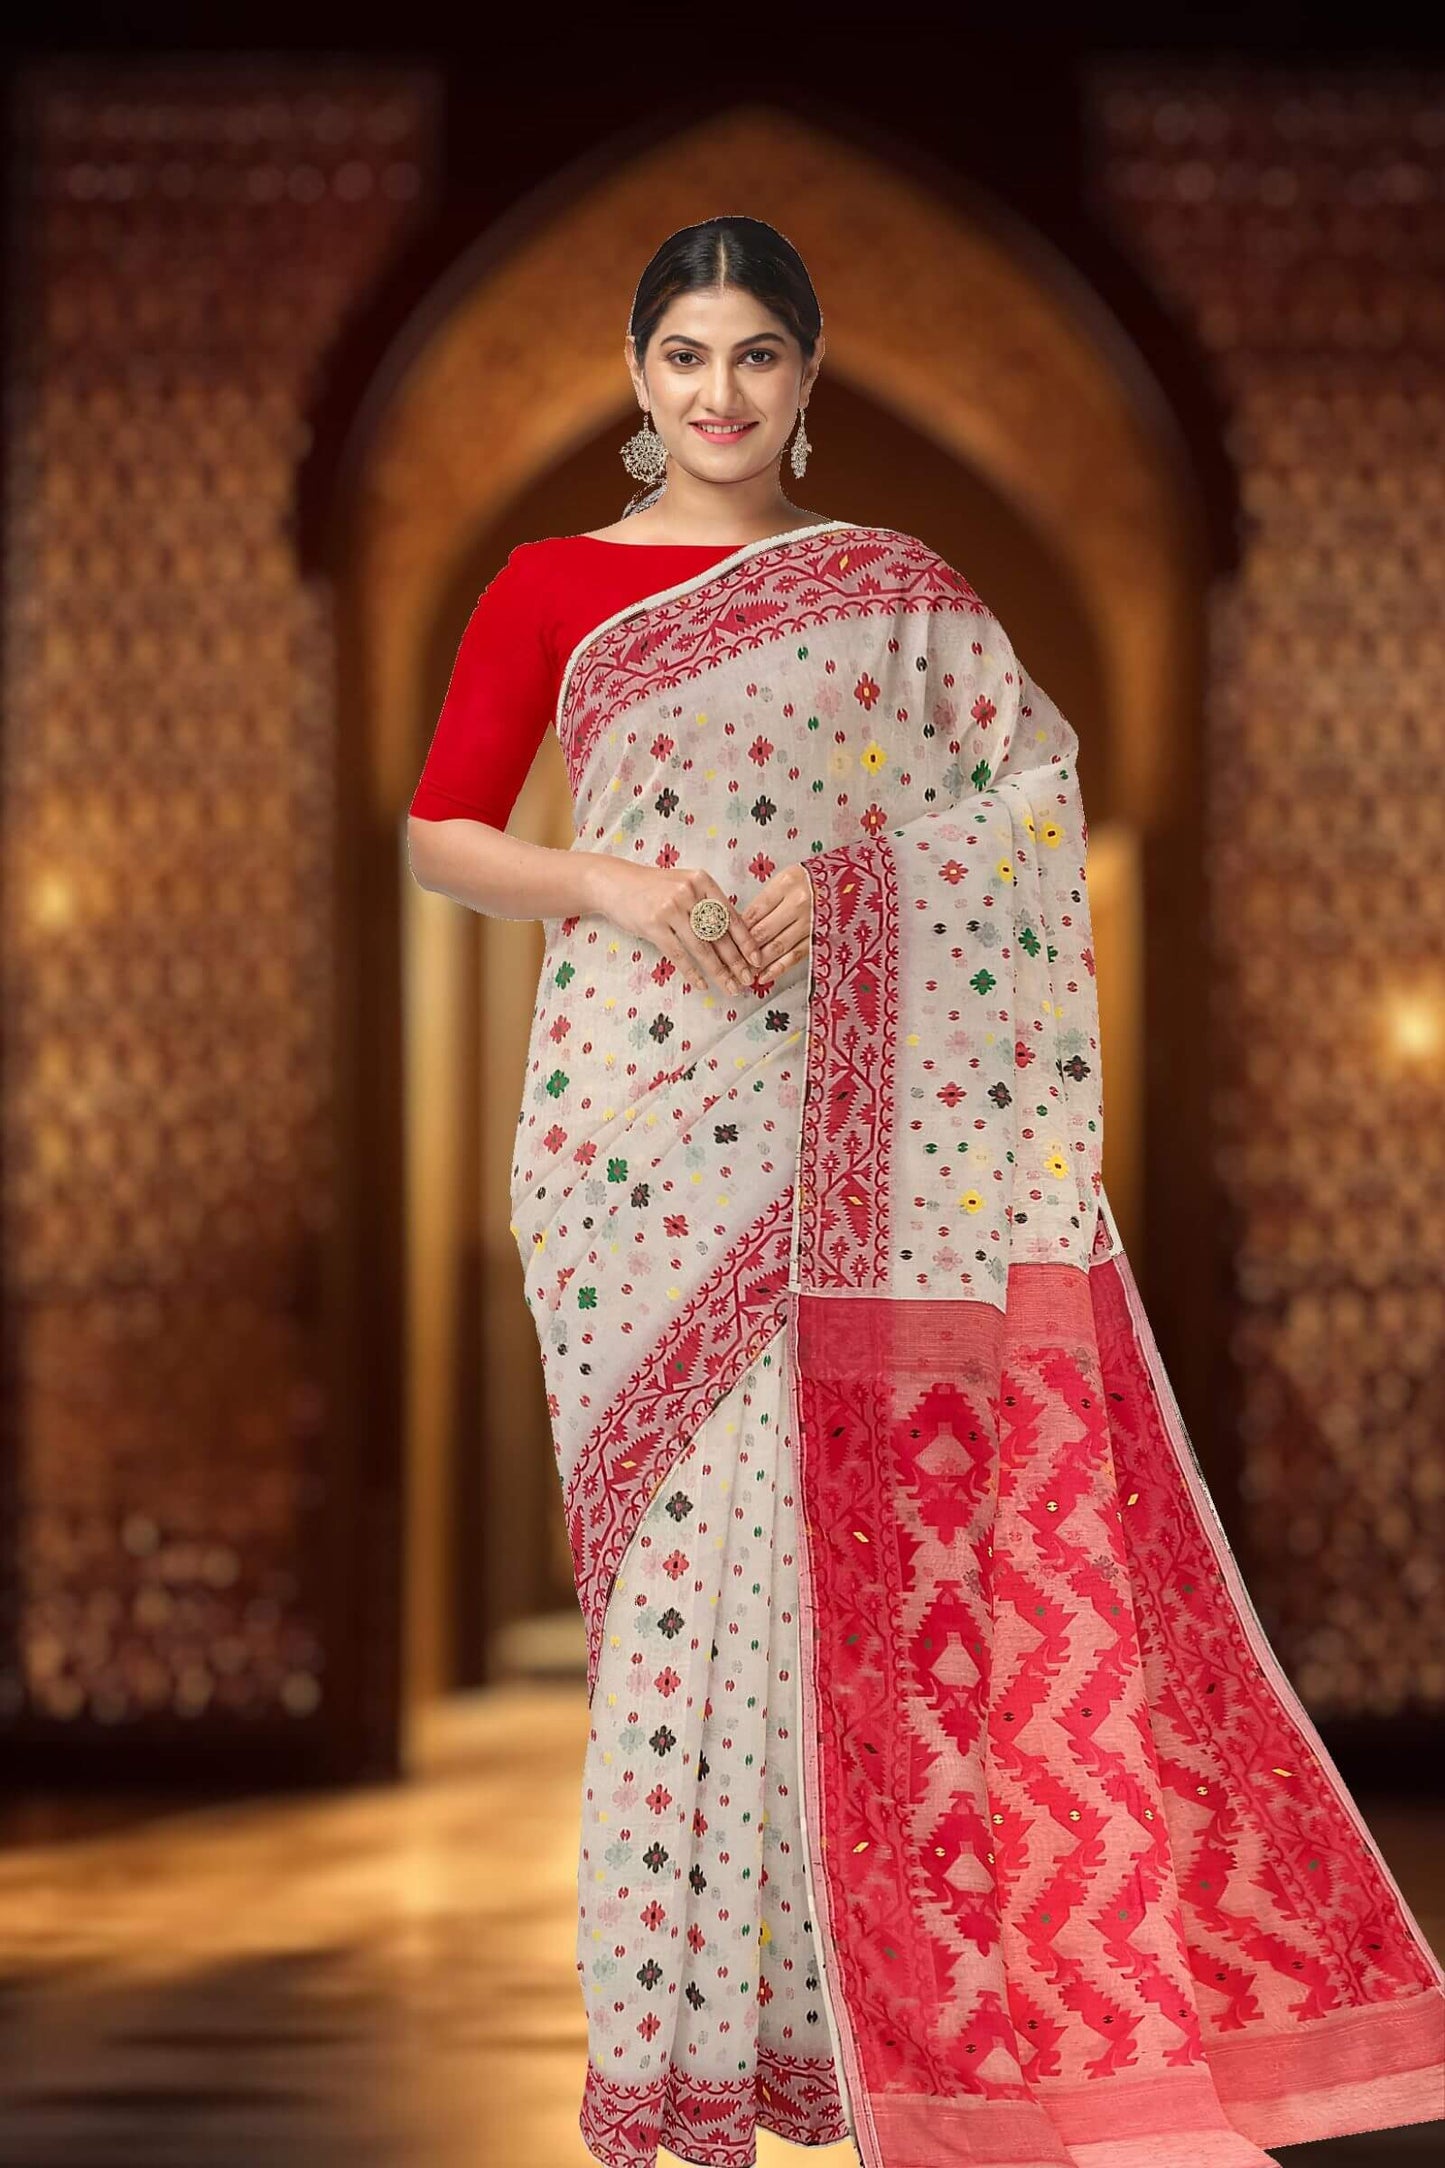 Off-White & Red Handloom Jacquard Weave Bangladesh Dhakai Design Saree